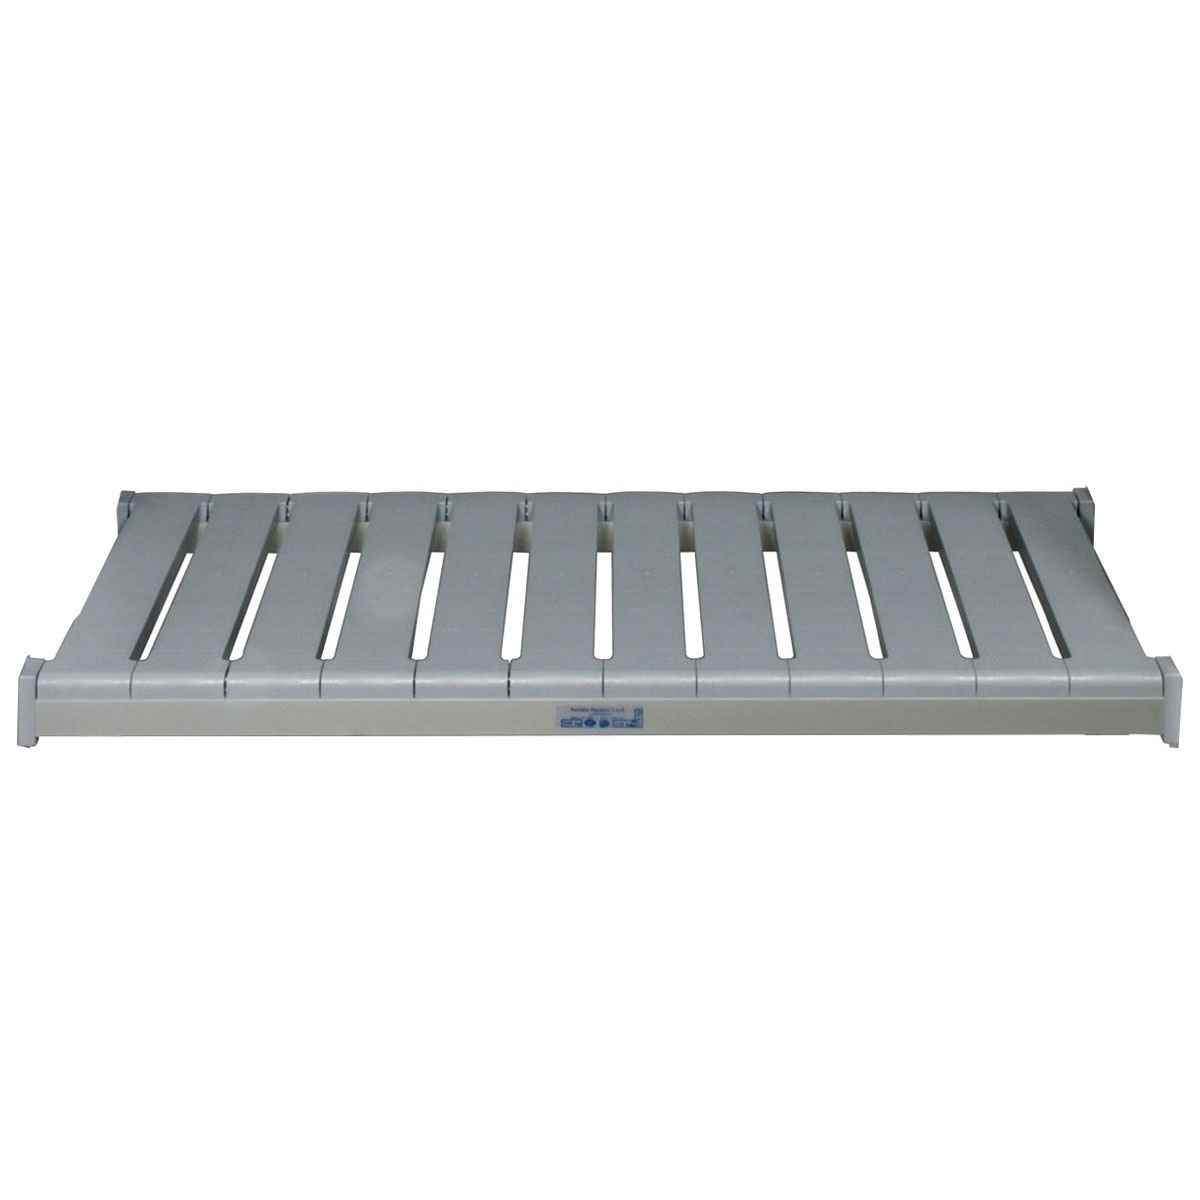 Eko Fit Polymer Range Additional Shelf - W1370 x D375mm - KFS391